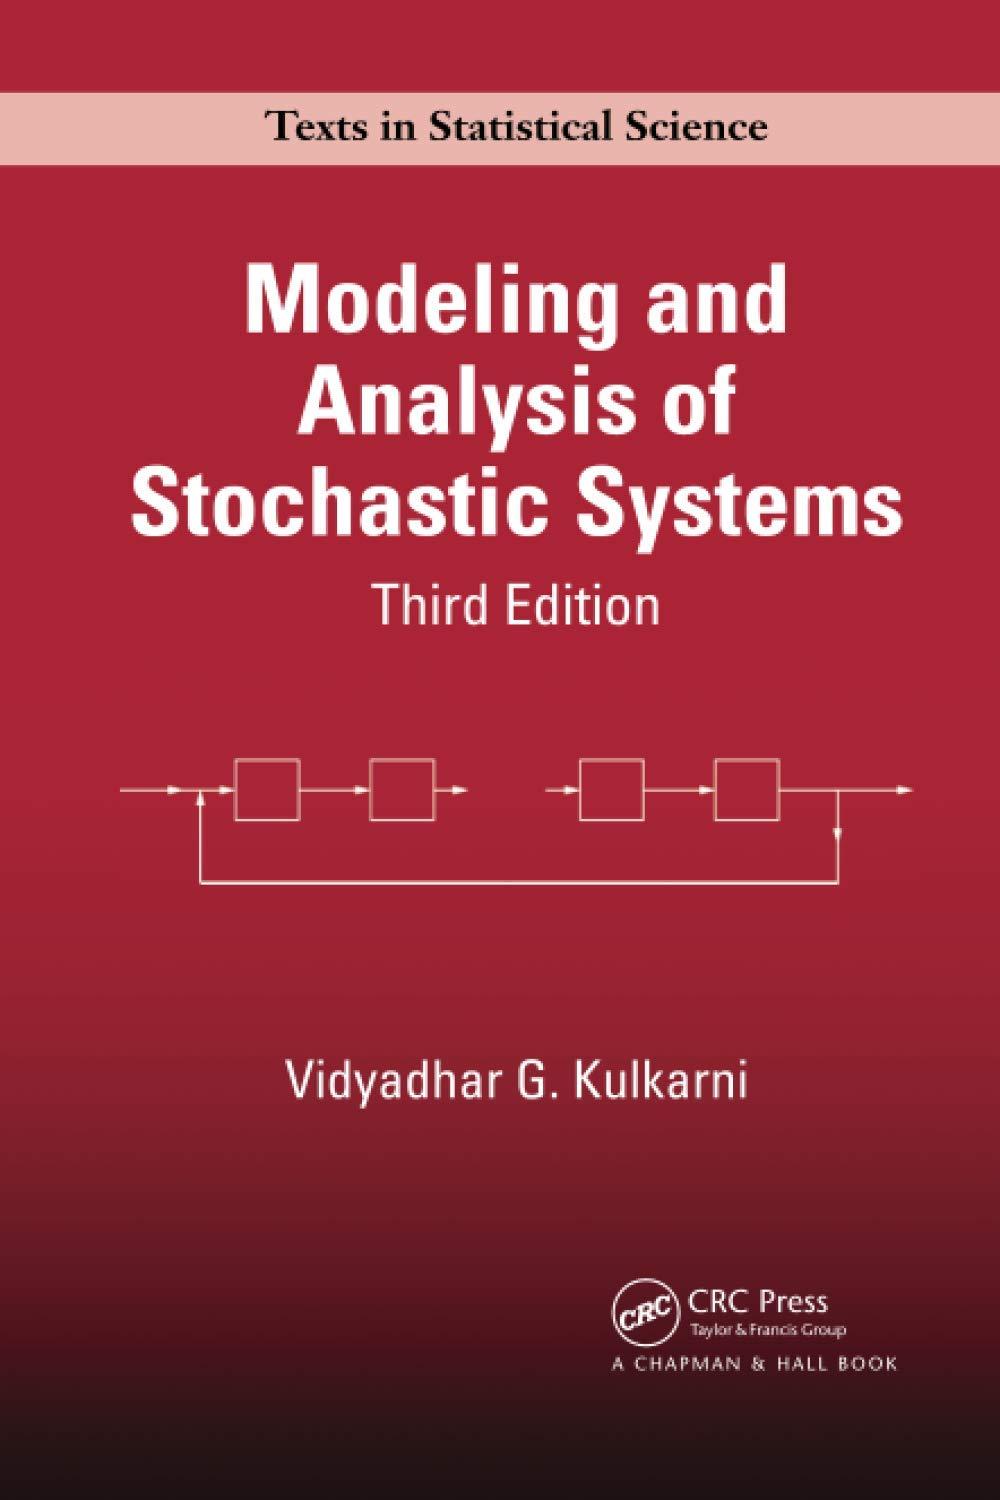 modeling and analysis of stochastic systems 3rd edition vidyadhar g. kulkarni 0367736799, 9780367736798